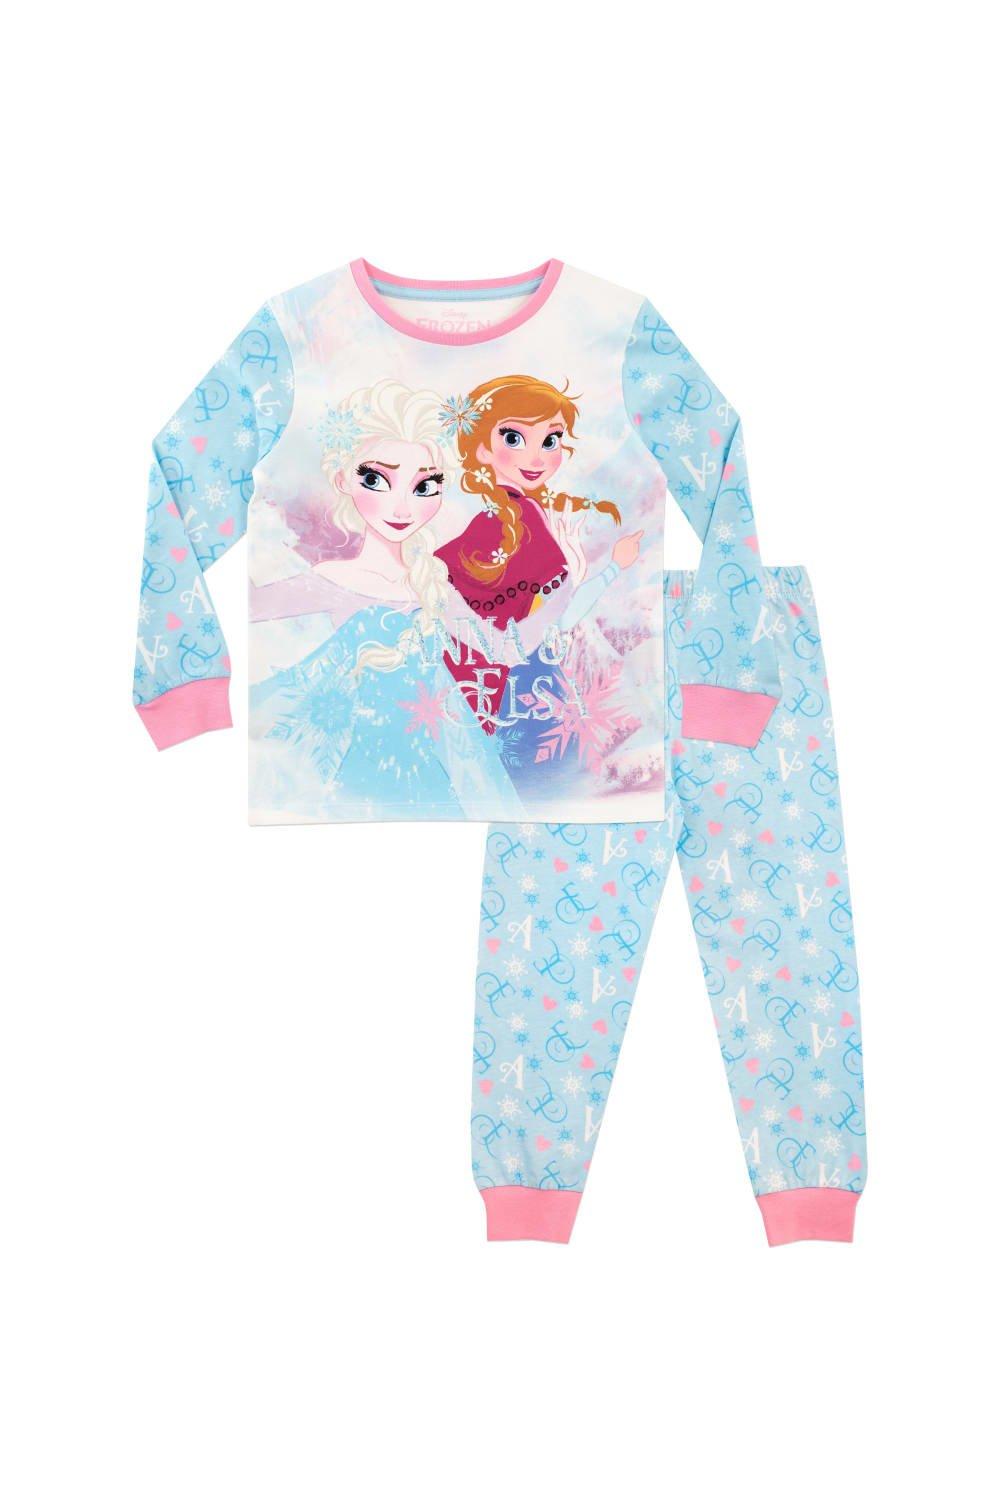 Frozen Elsa and Anna Pyjamas